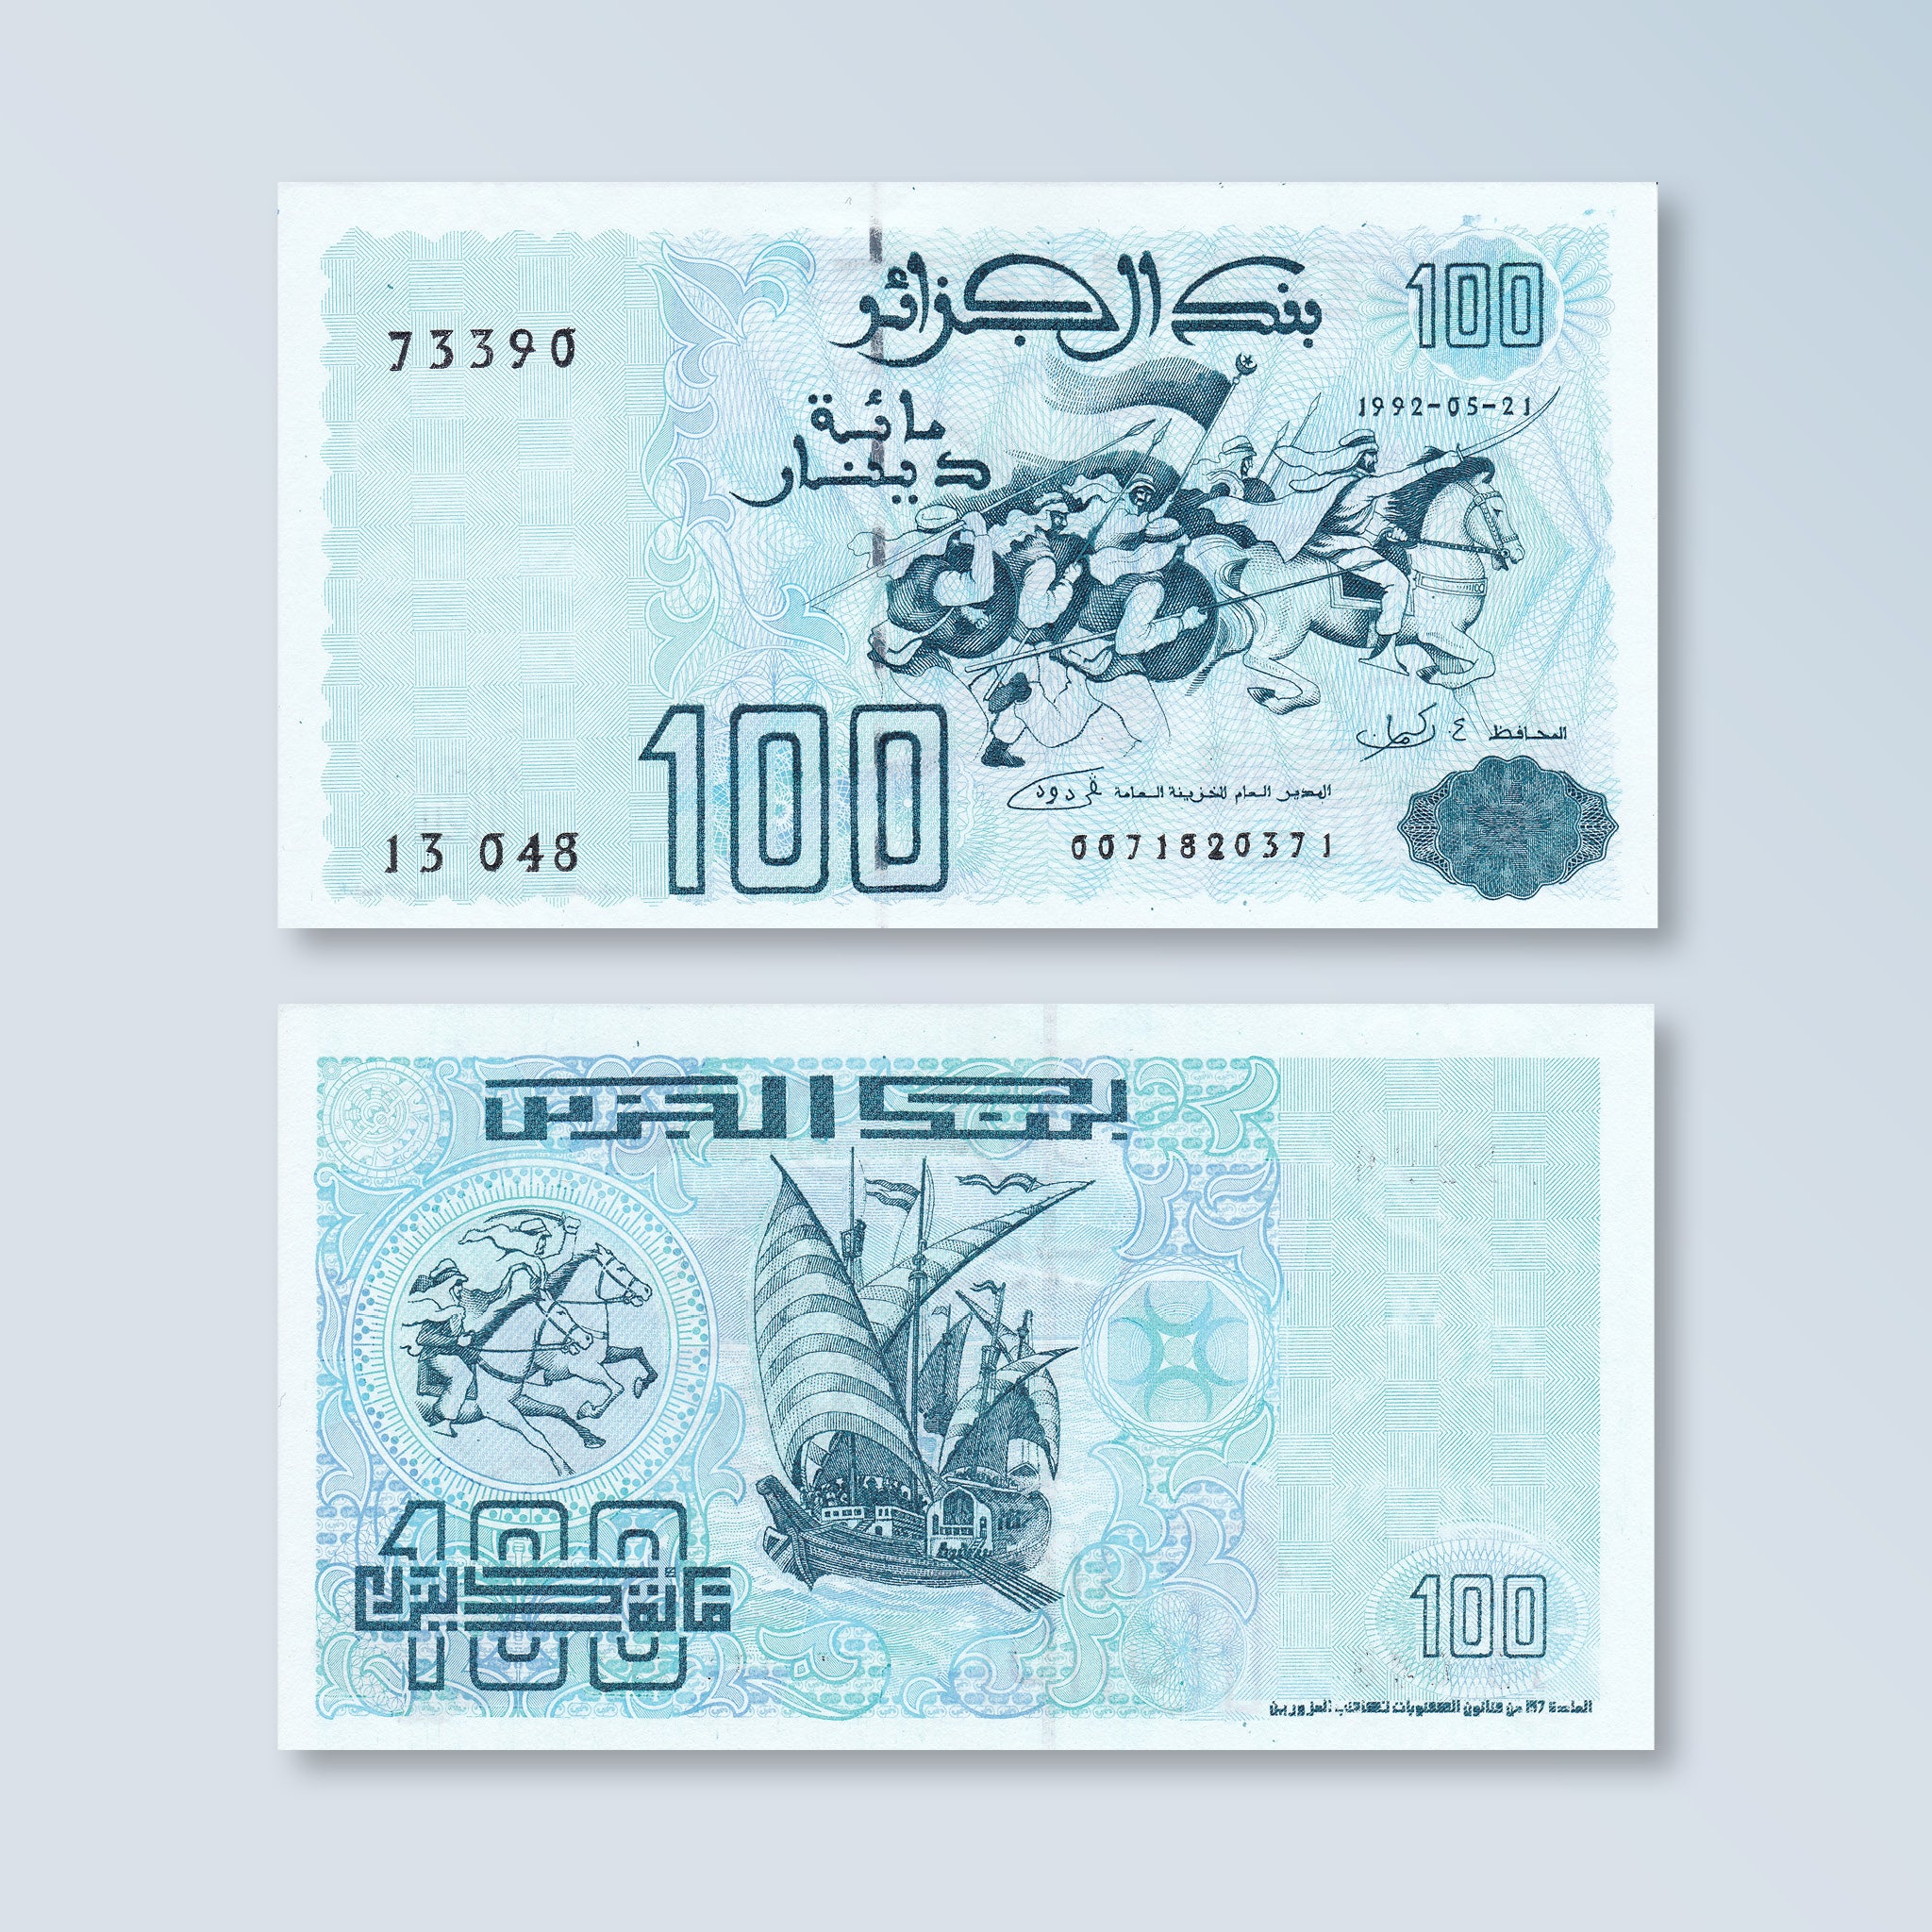 Algeria 100 Dinars, 1992, B401a, P137, UNC - Robert's World Money - World Banknotes